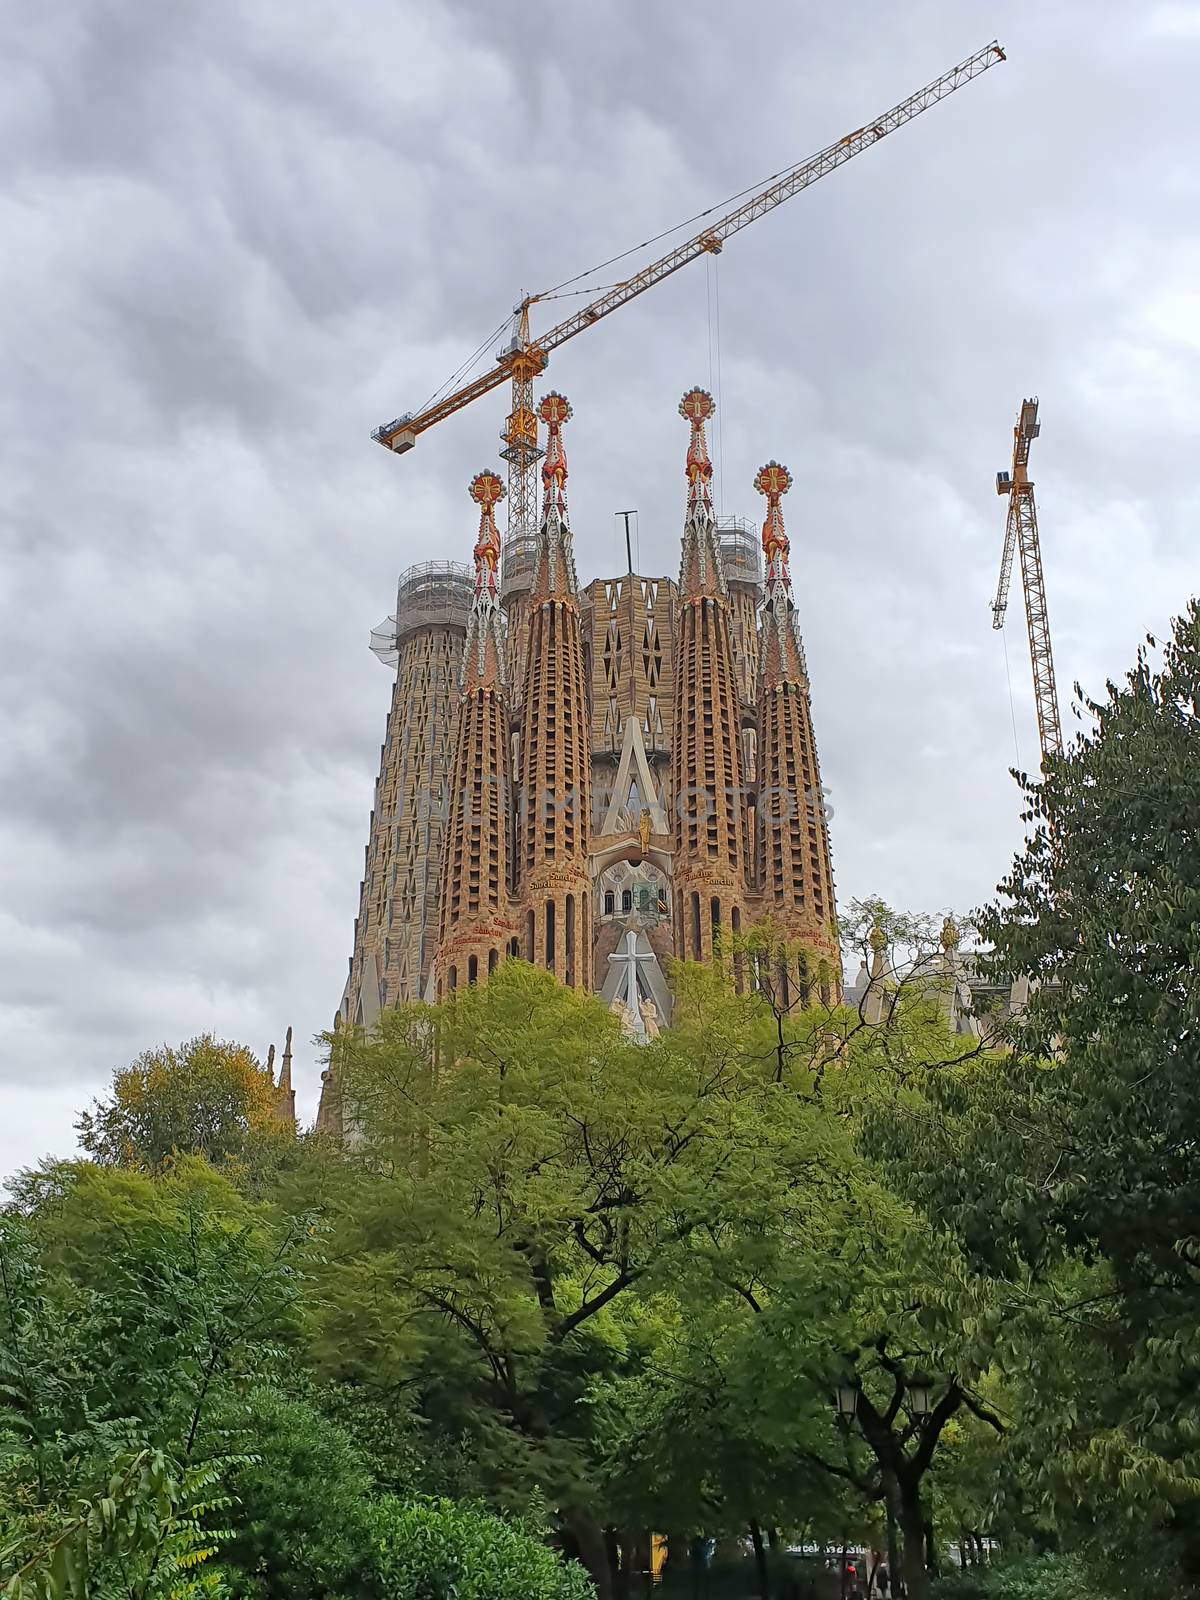 Sagrada Familia Cathedral by Gaudi, most  important landmark in Barcelona